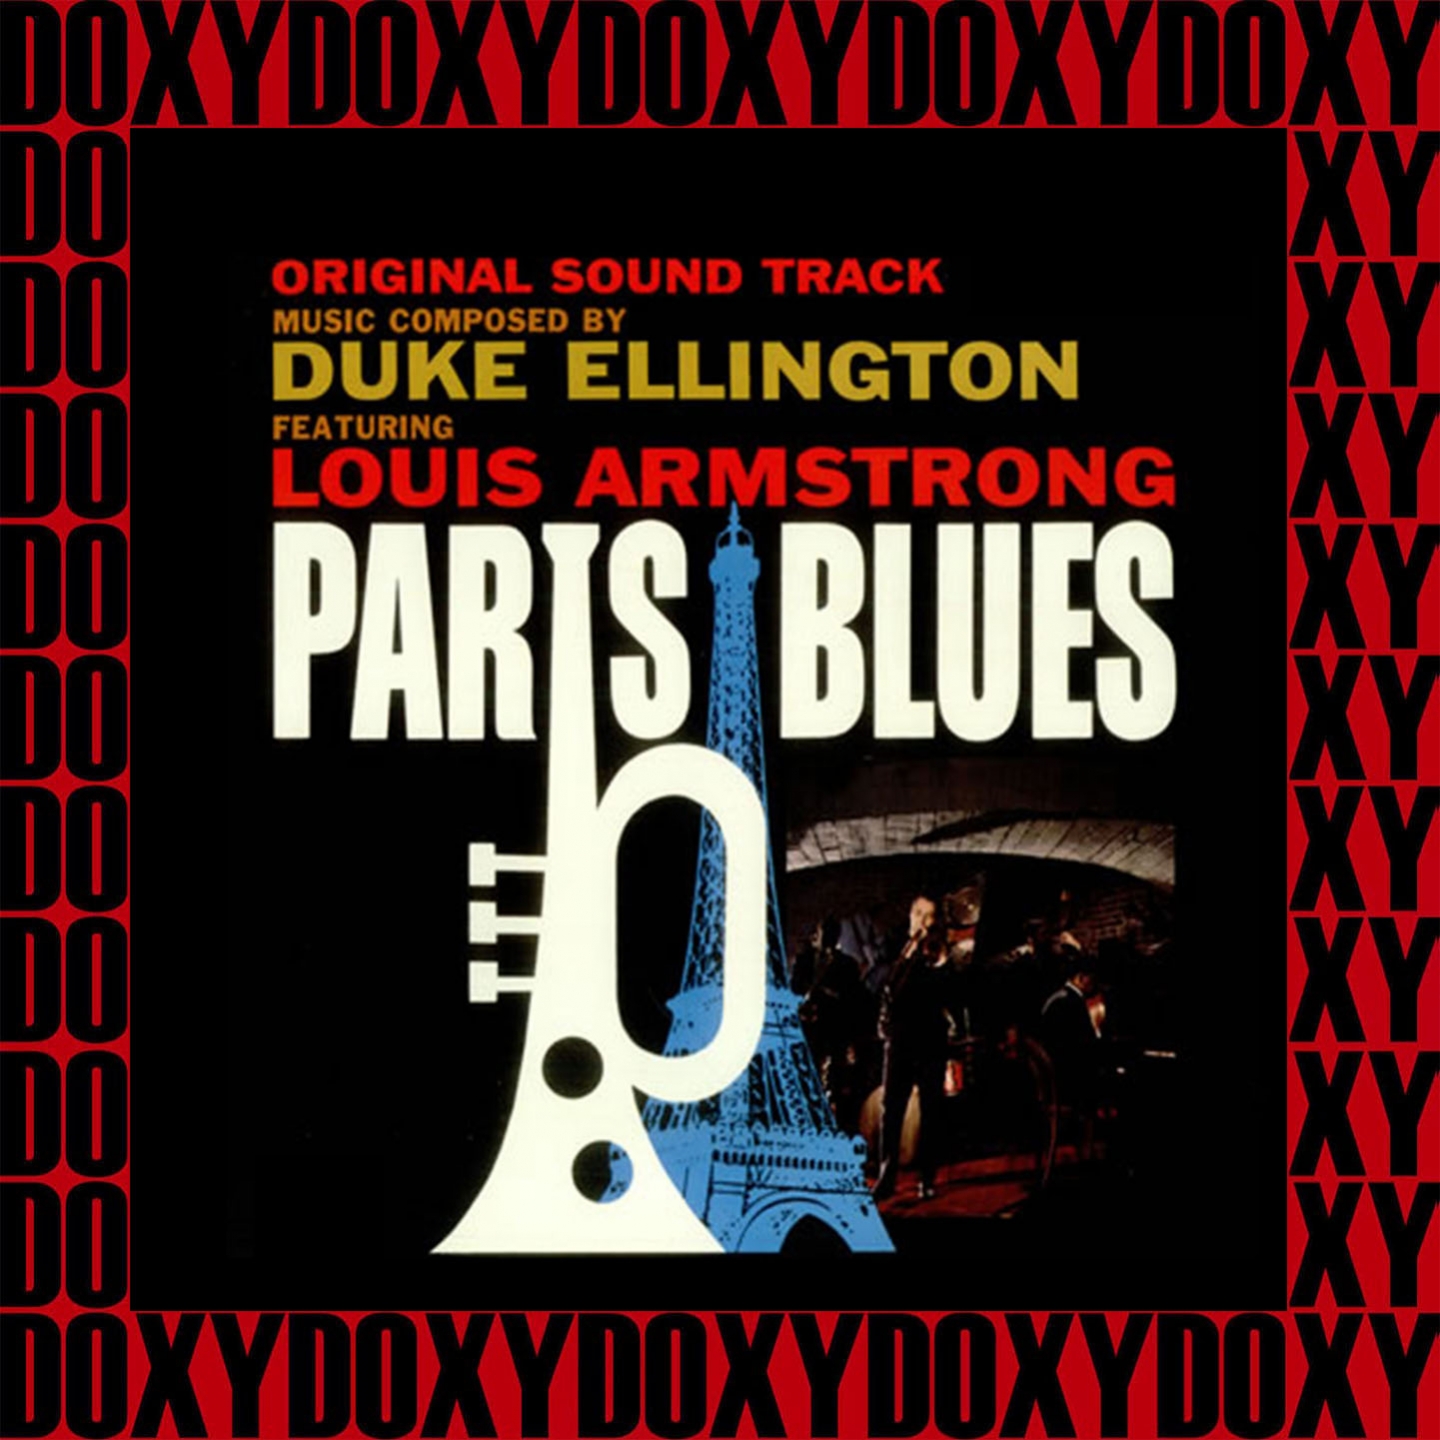 Paris Blues, Original Motion Picture Soundtrack (Remastered Version) (Doxy Collection)